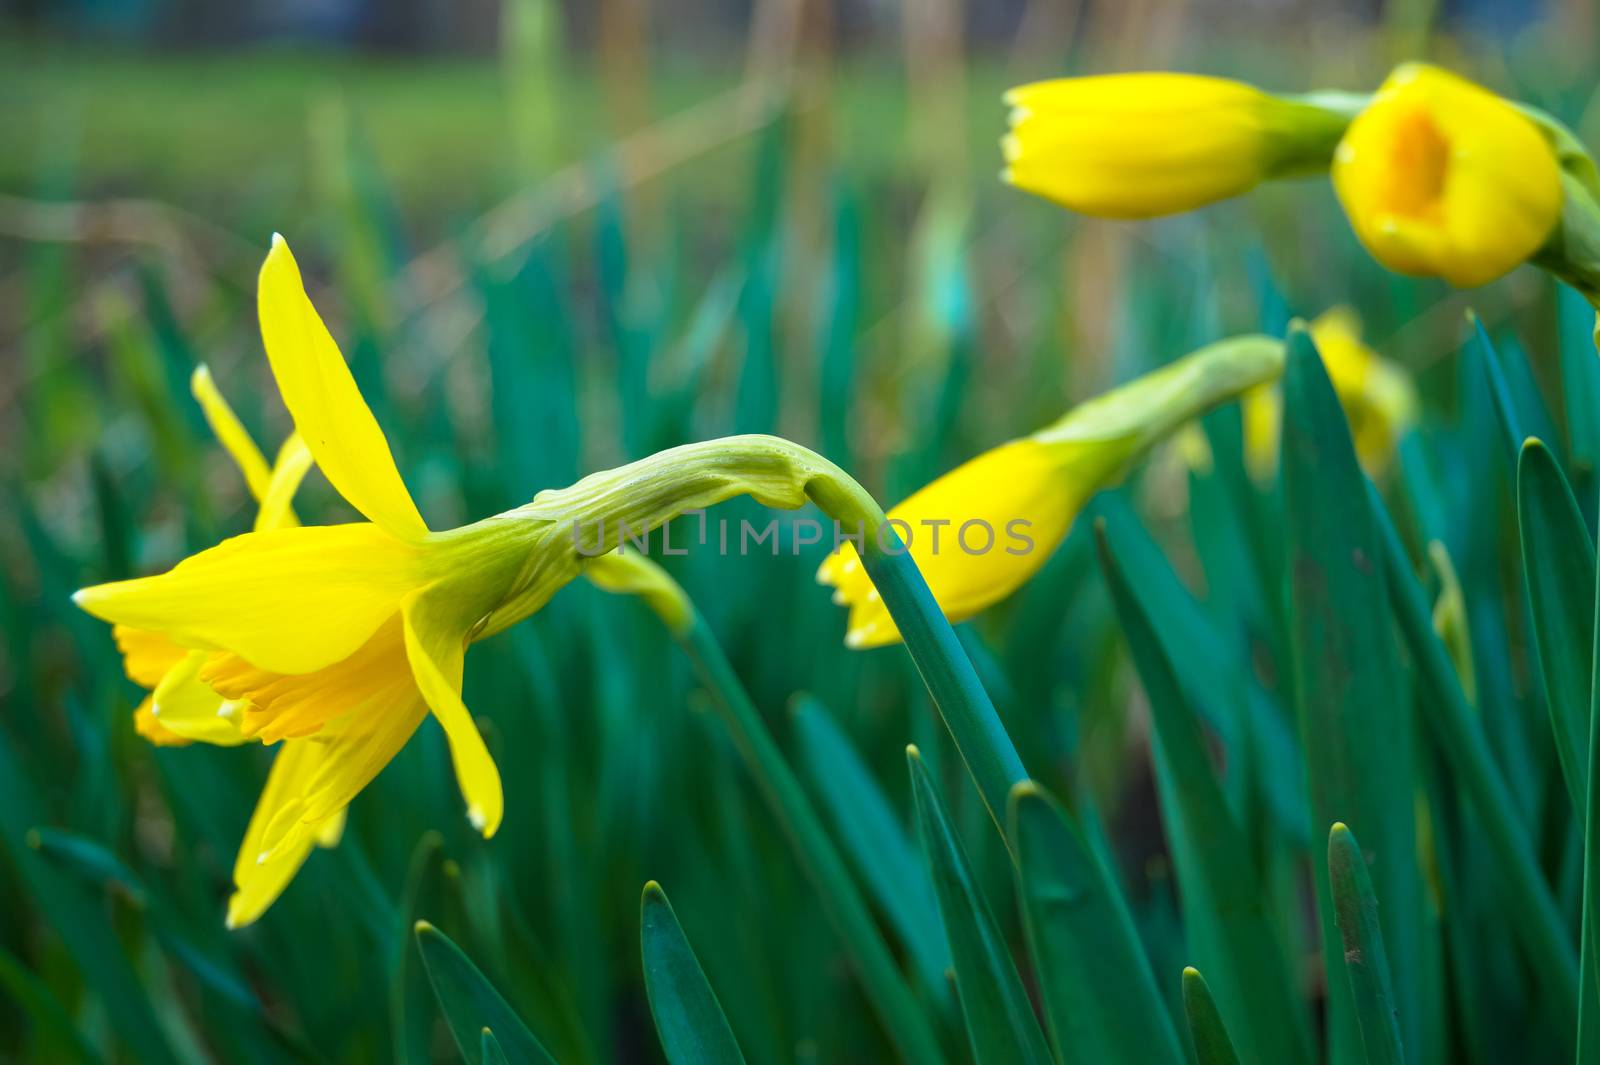 spring flower yellow daffodil Narcissus by Oleczka11